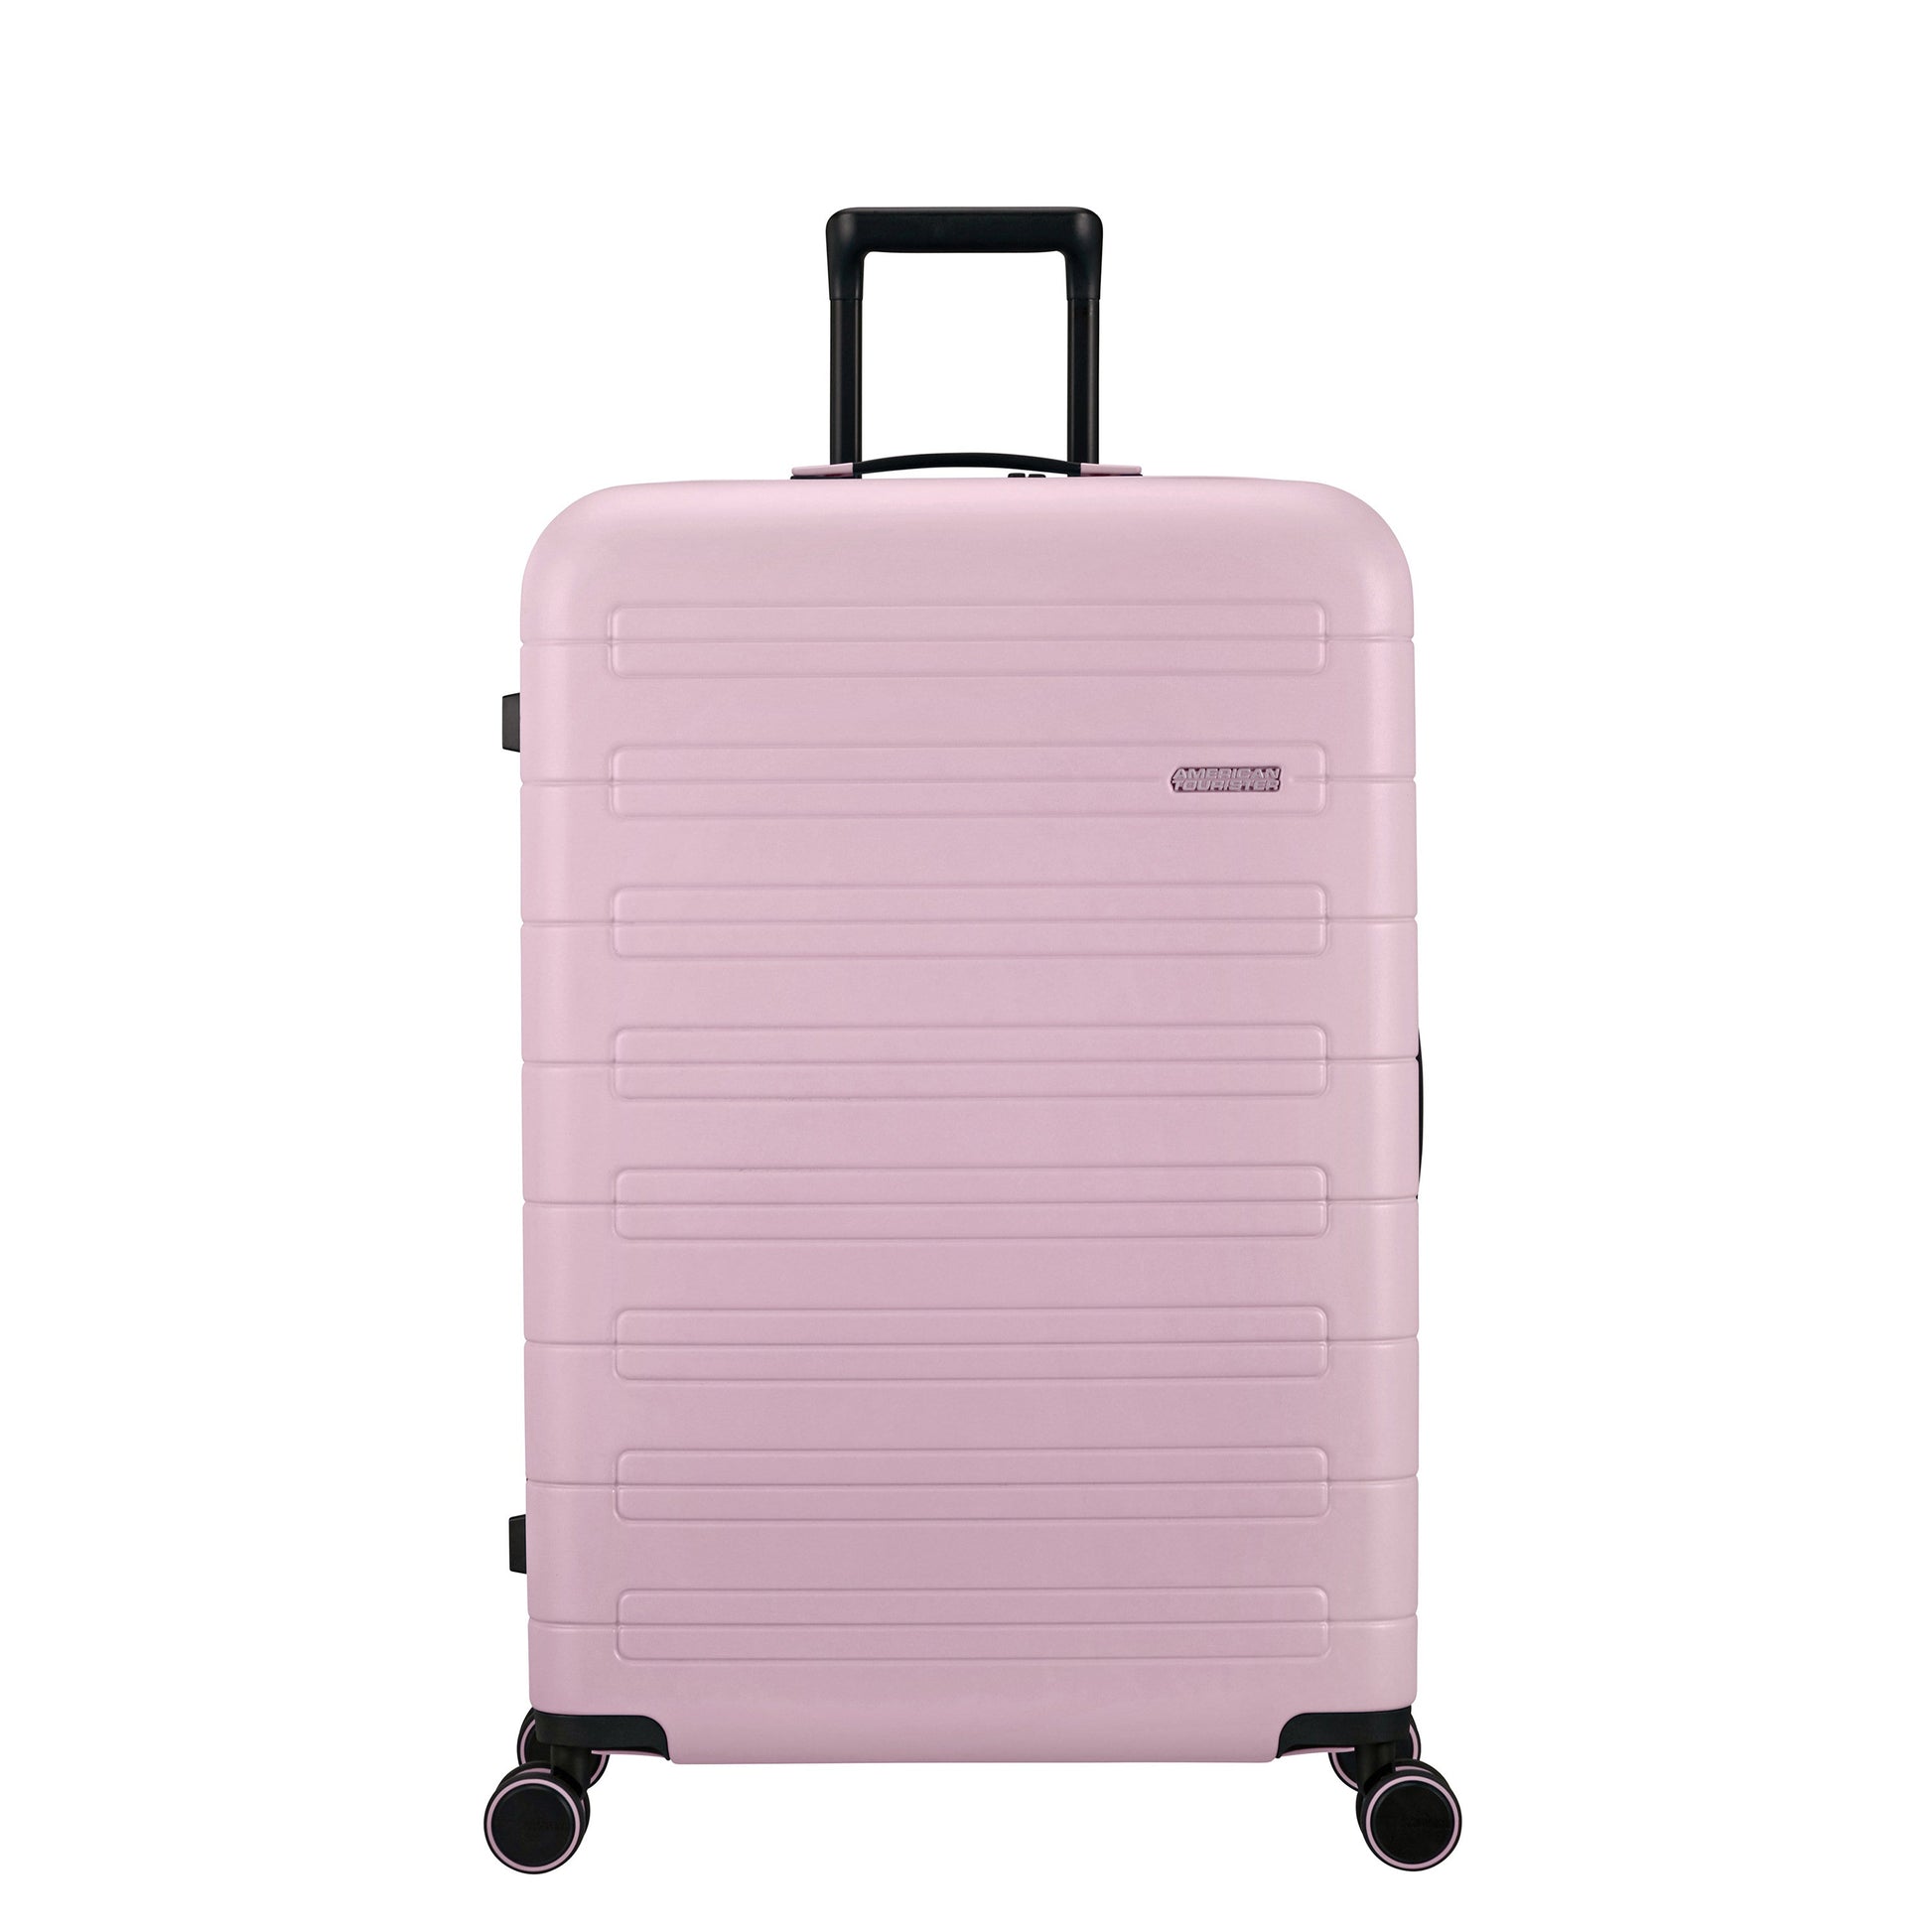 American Tourister Novastream 2-Piece Expandable Luggage Set - Medium & Large - Soft Pink